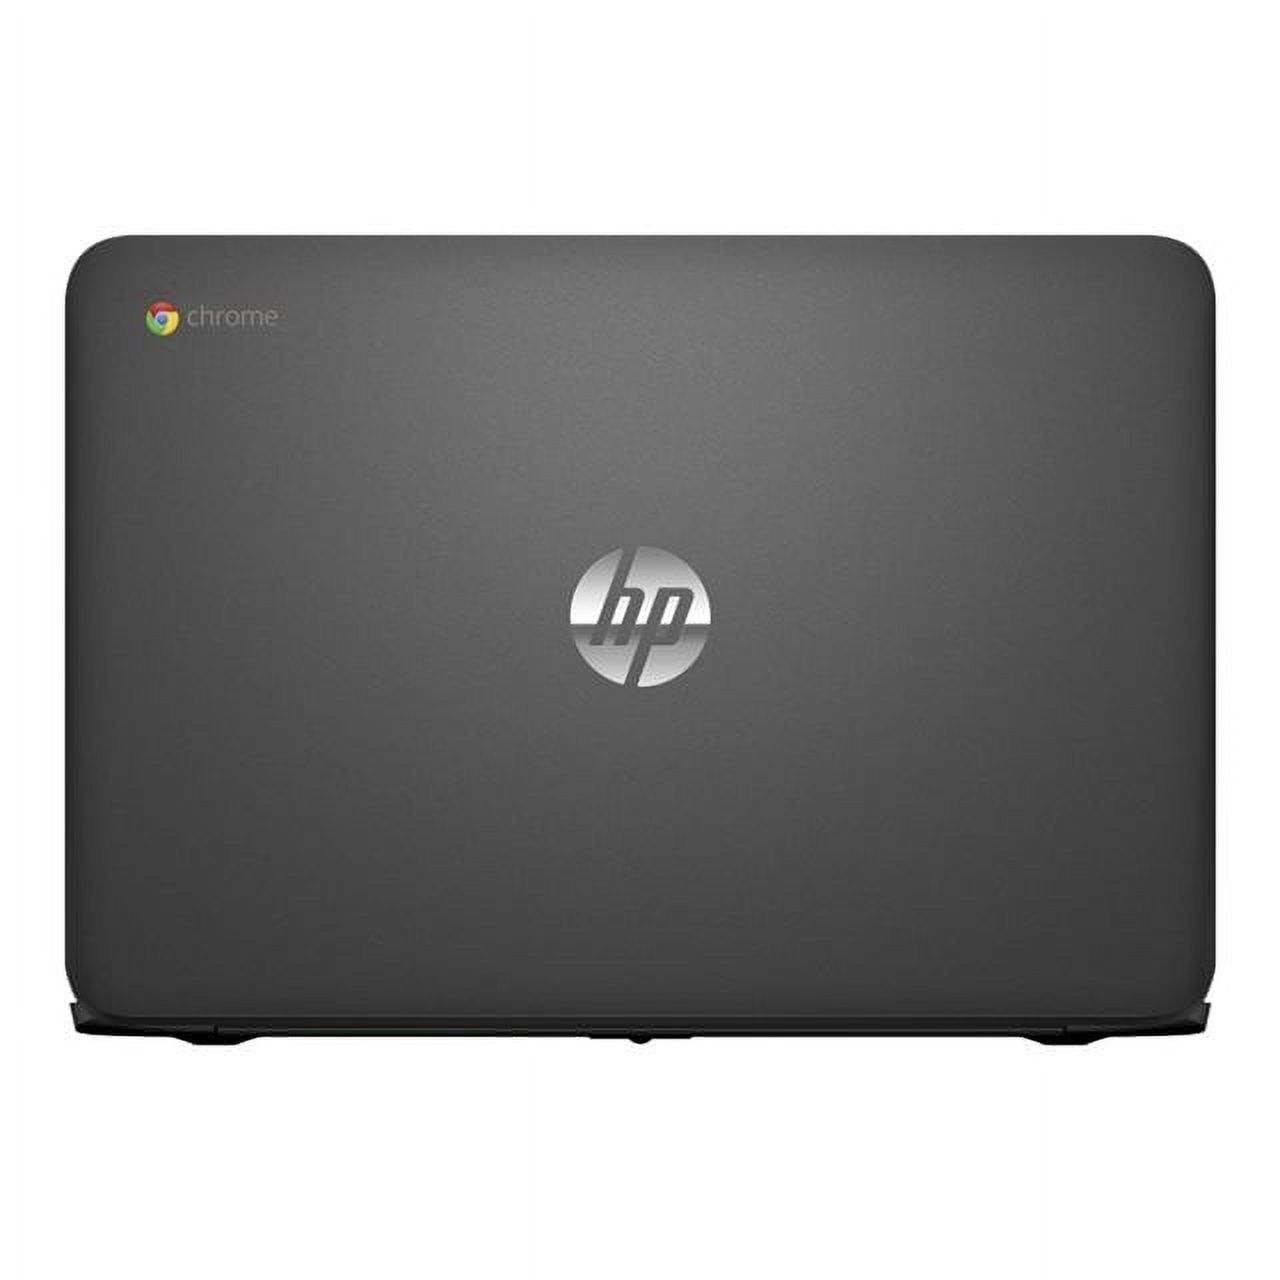 HP Chromebook V2W29UT#ABA Intel Celeron N2840 X2 2.16GHz 2GB 16GB SSD 11.6",&nbsp;Gray&nbsp; (Used) - image 2 of 4